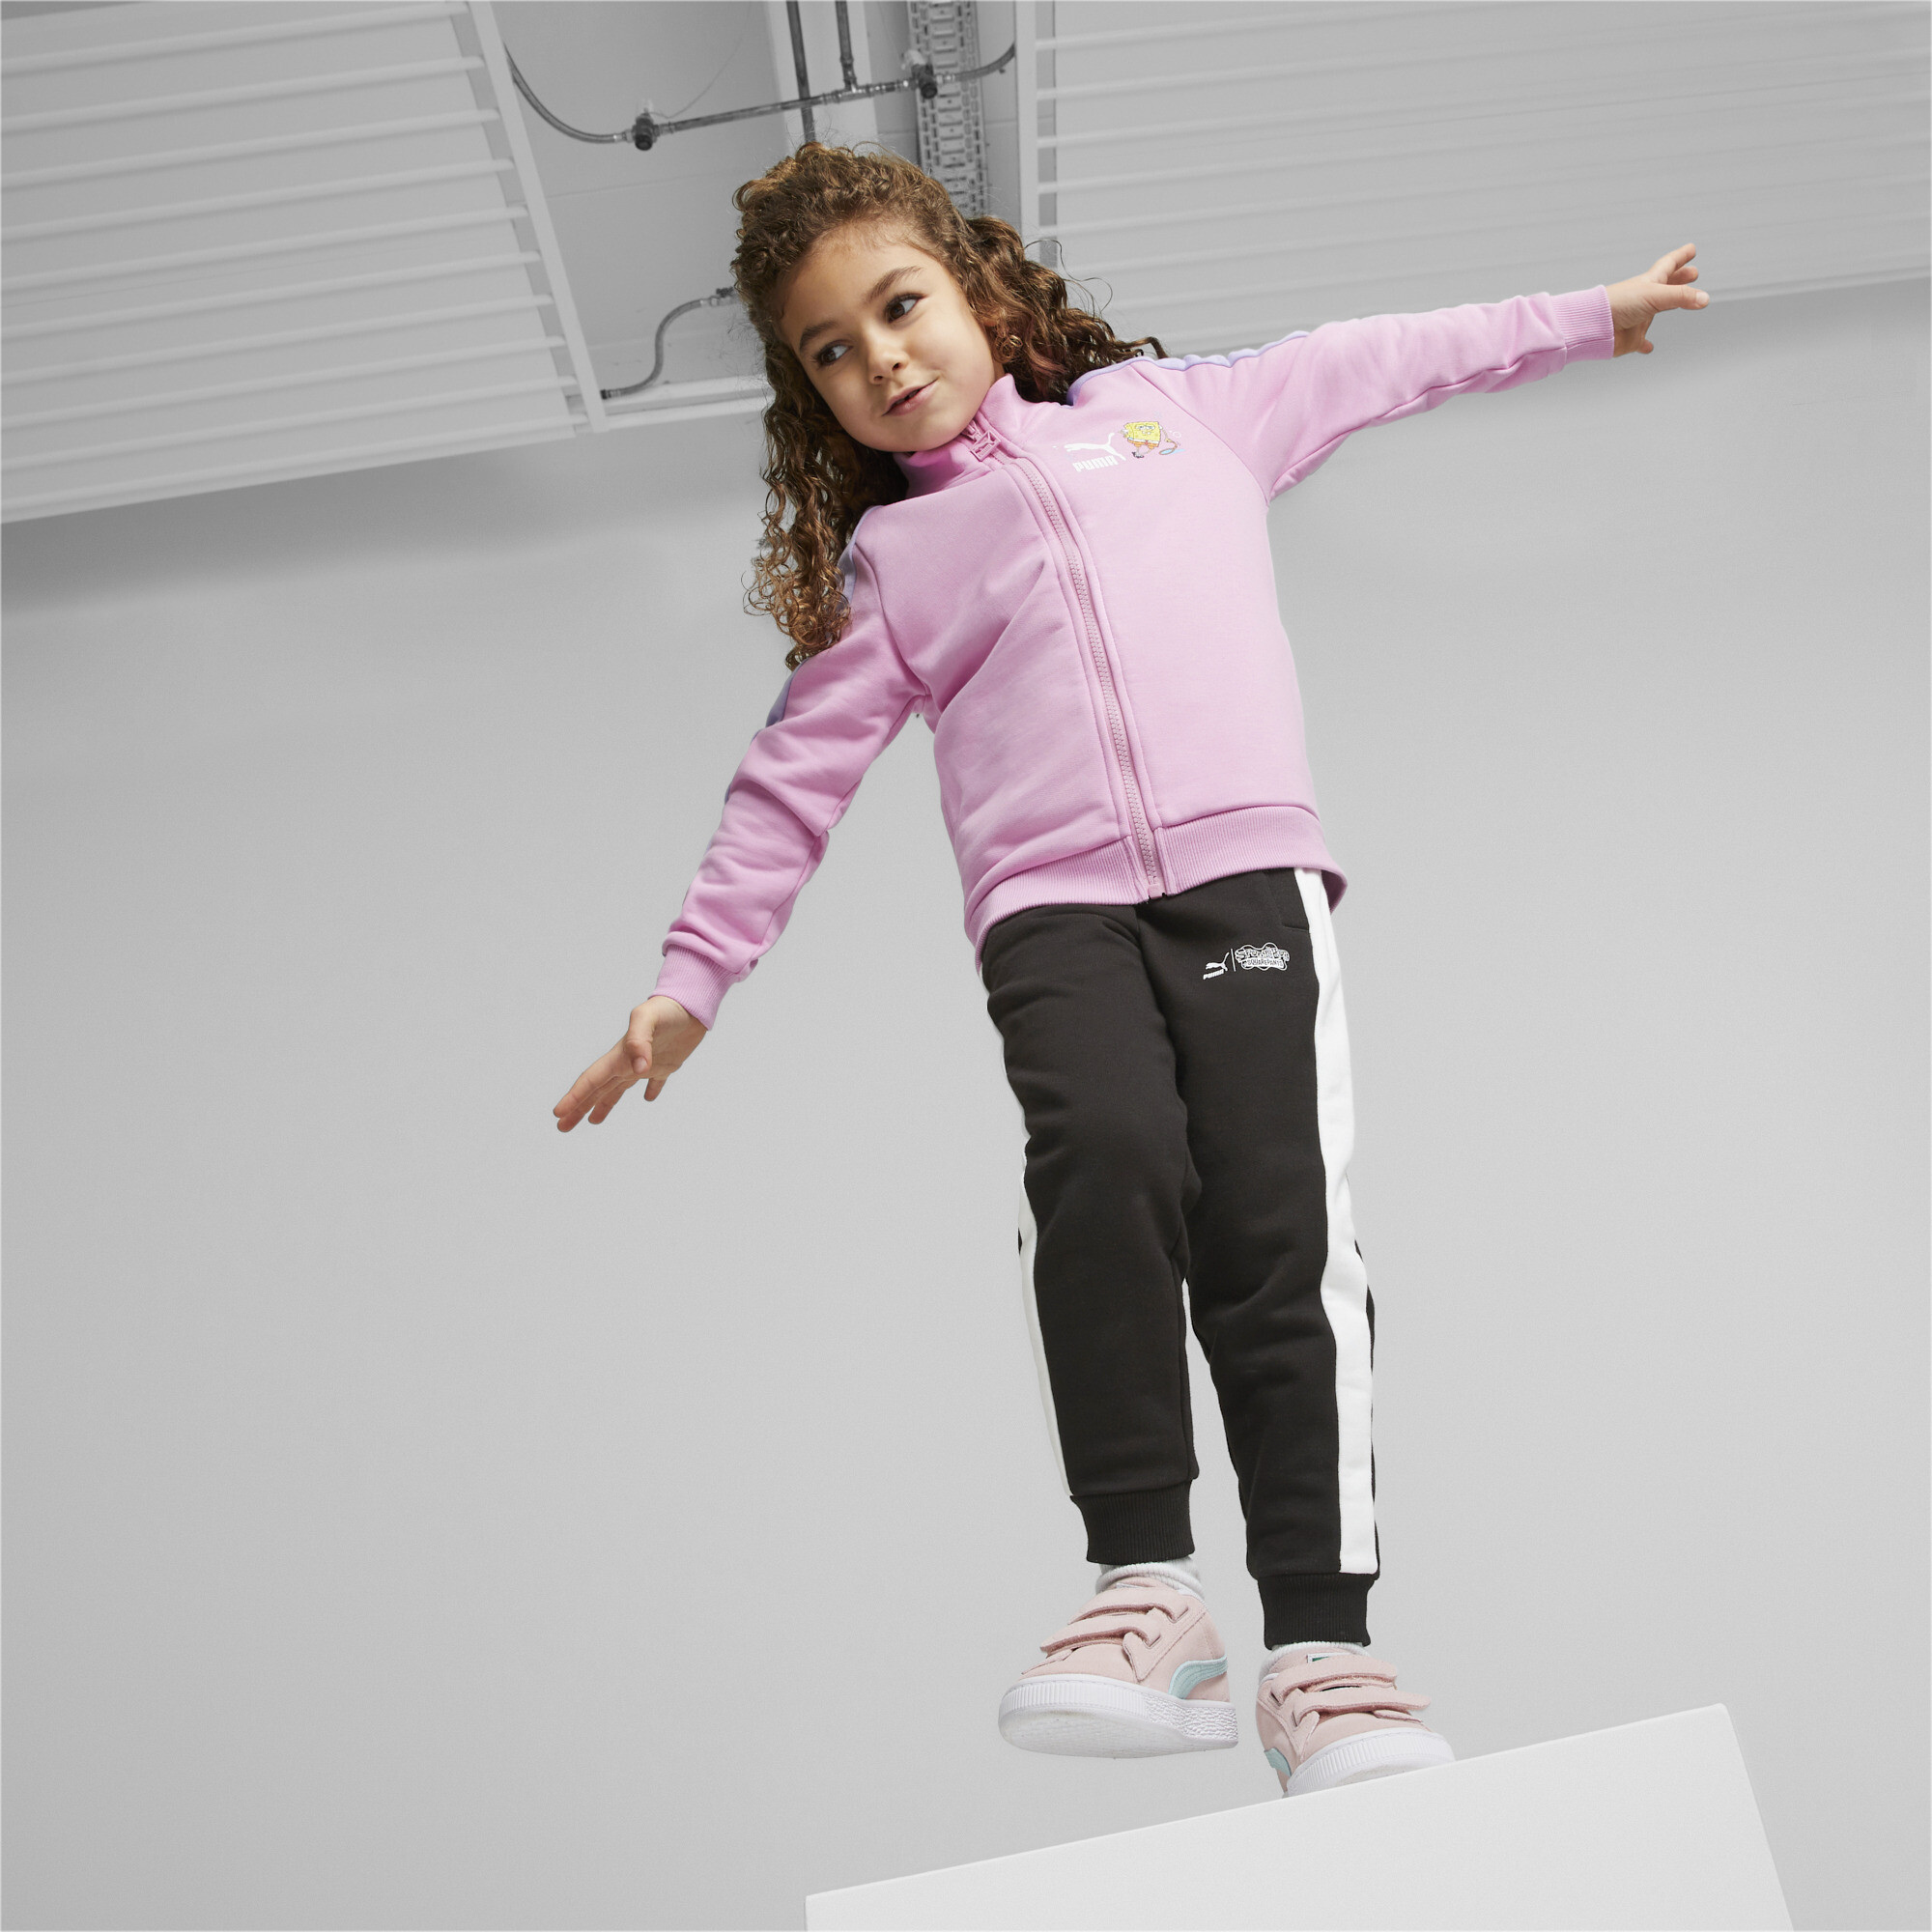 PUMA X SPONGEBOB T7 Jacket Kids In Pink, Size 13-14 Youth